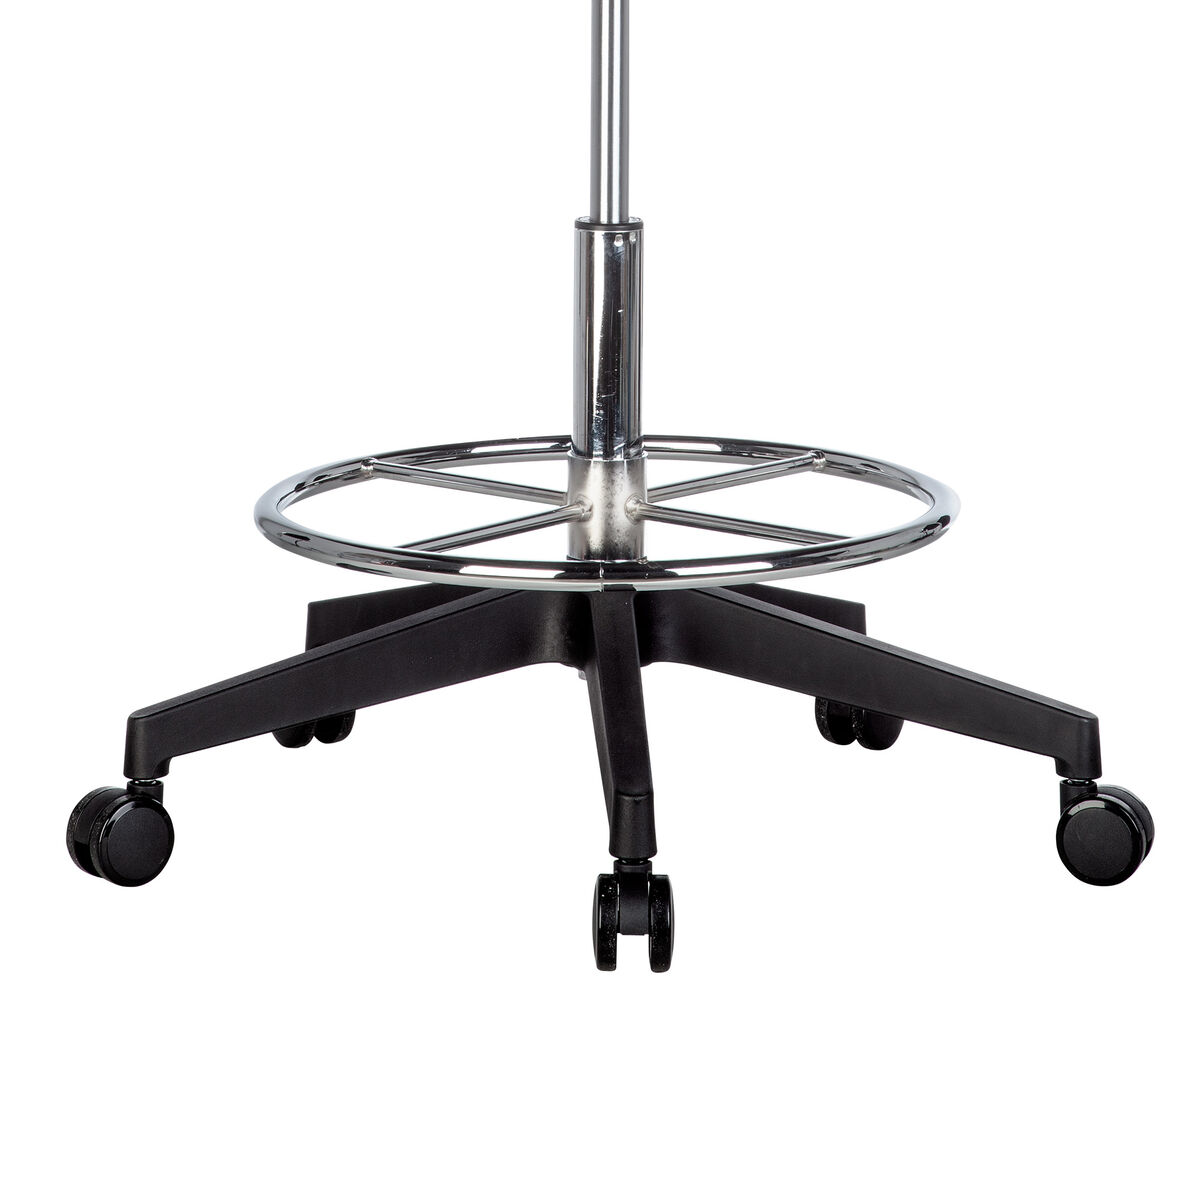 Drafting Chair | Standing Desk Office Chair | Vari®